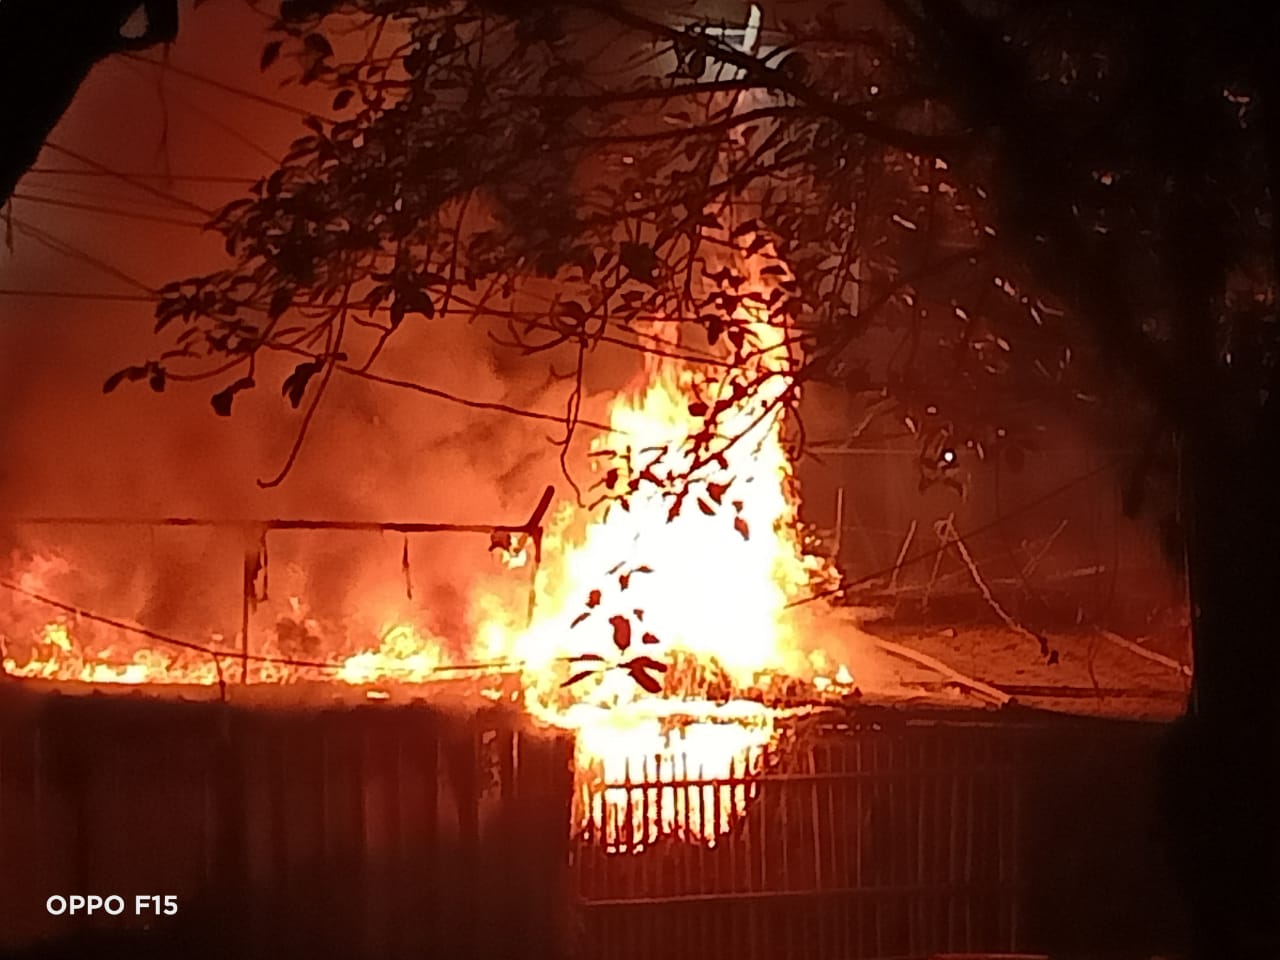 More than five lakh damage due to fire near Phalmandi फलमंडी के समीप